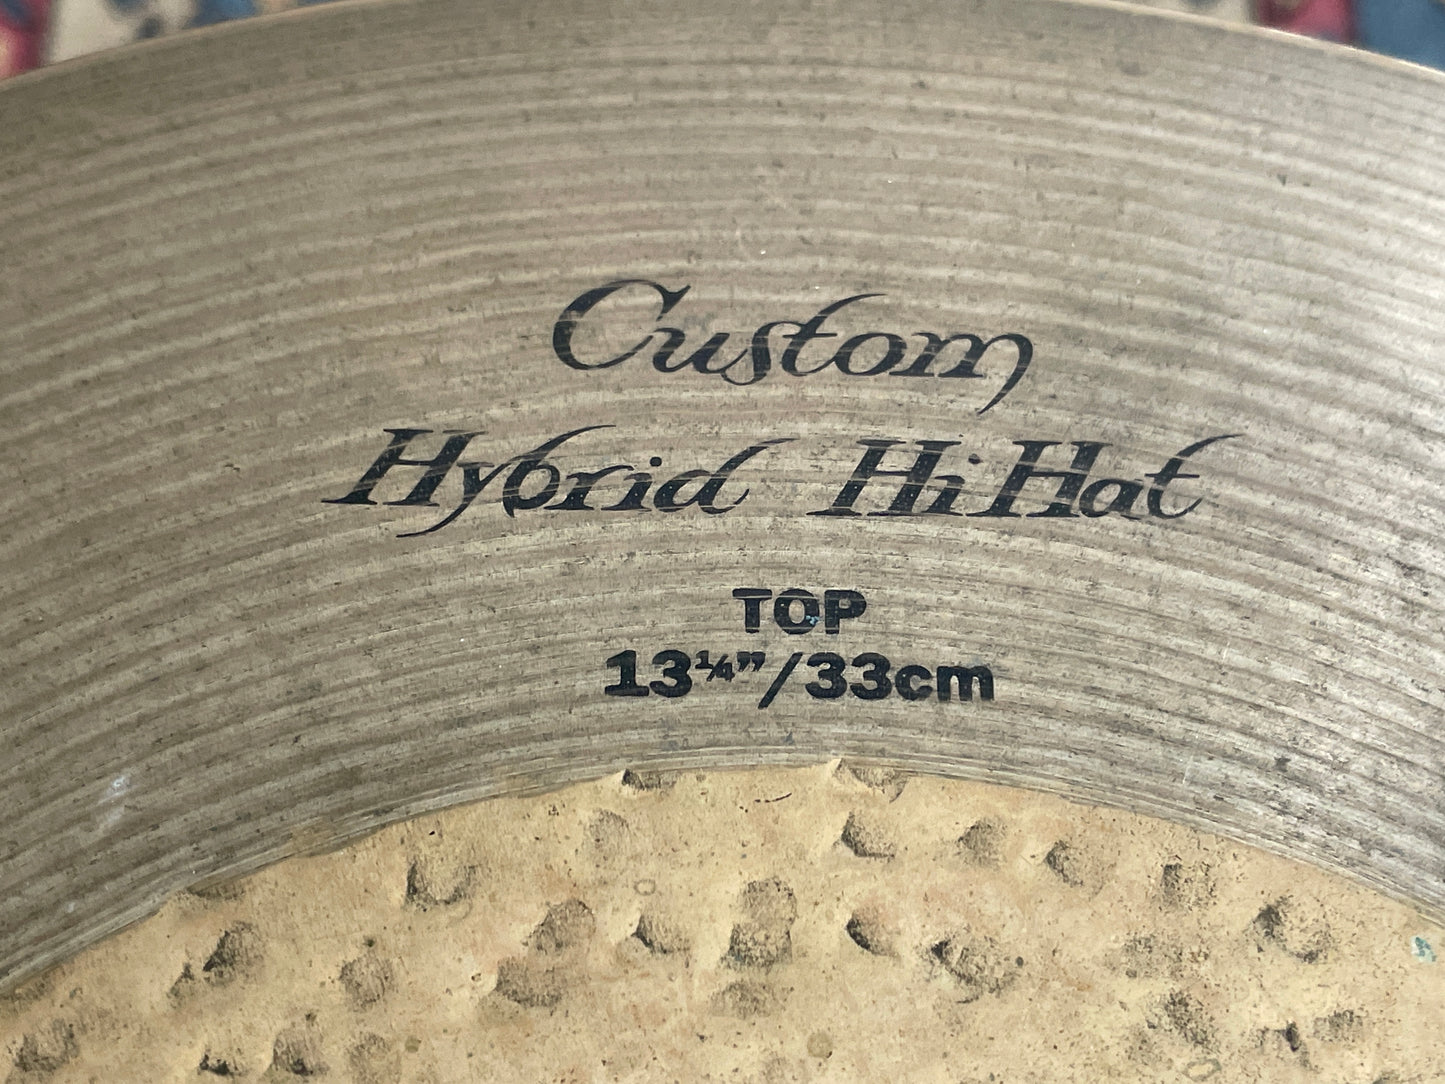 13-1/4" Zildjian K Custom Hybrid Hi-Hat Top Single Cymbal 866g